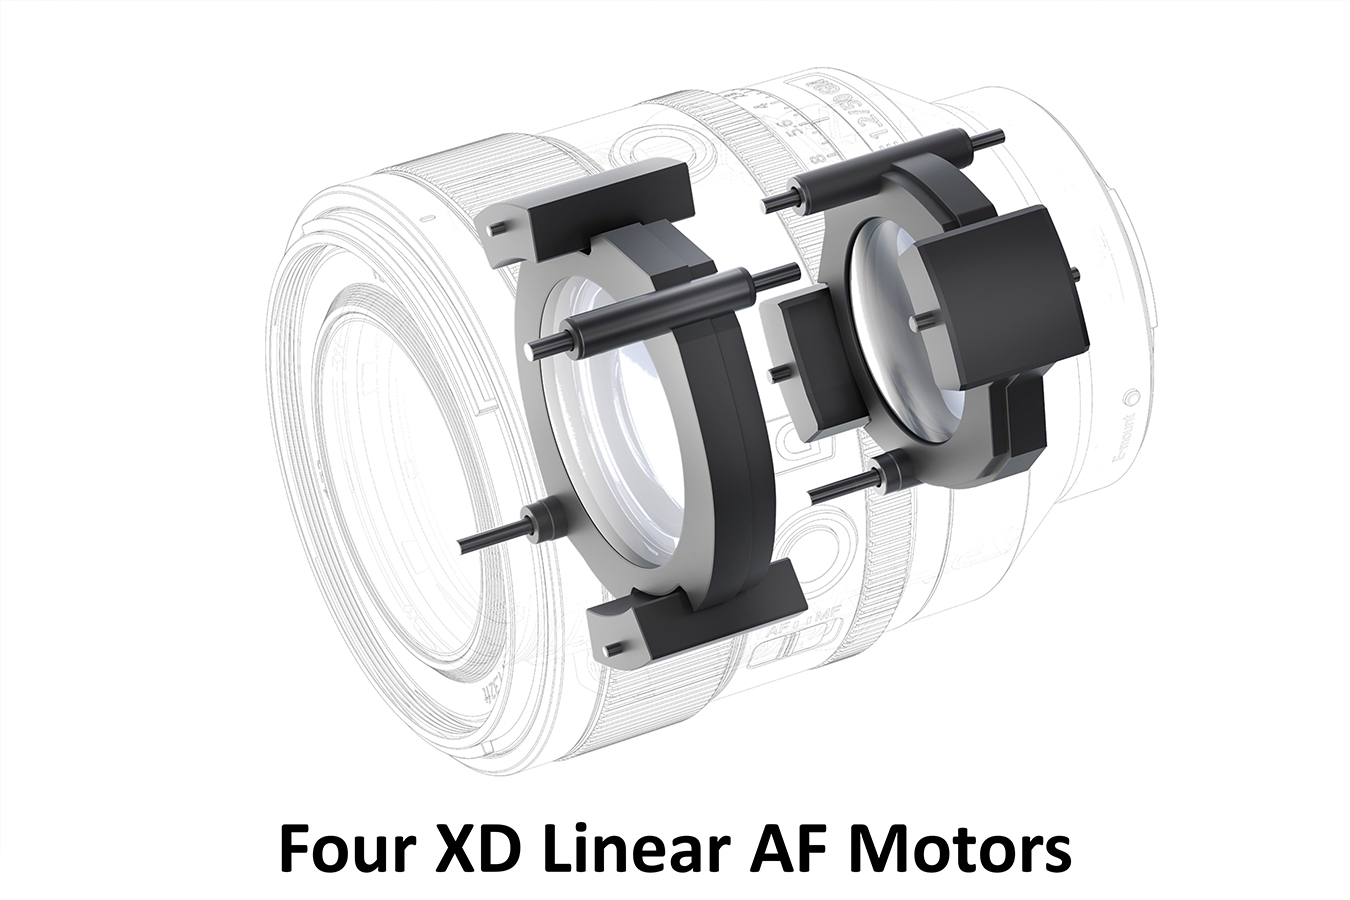 Sony FE 50mm F1.2 G Master Lens